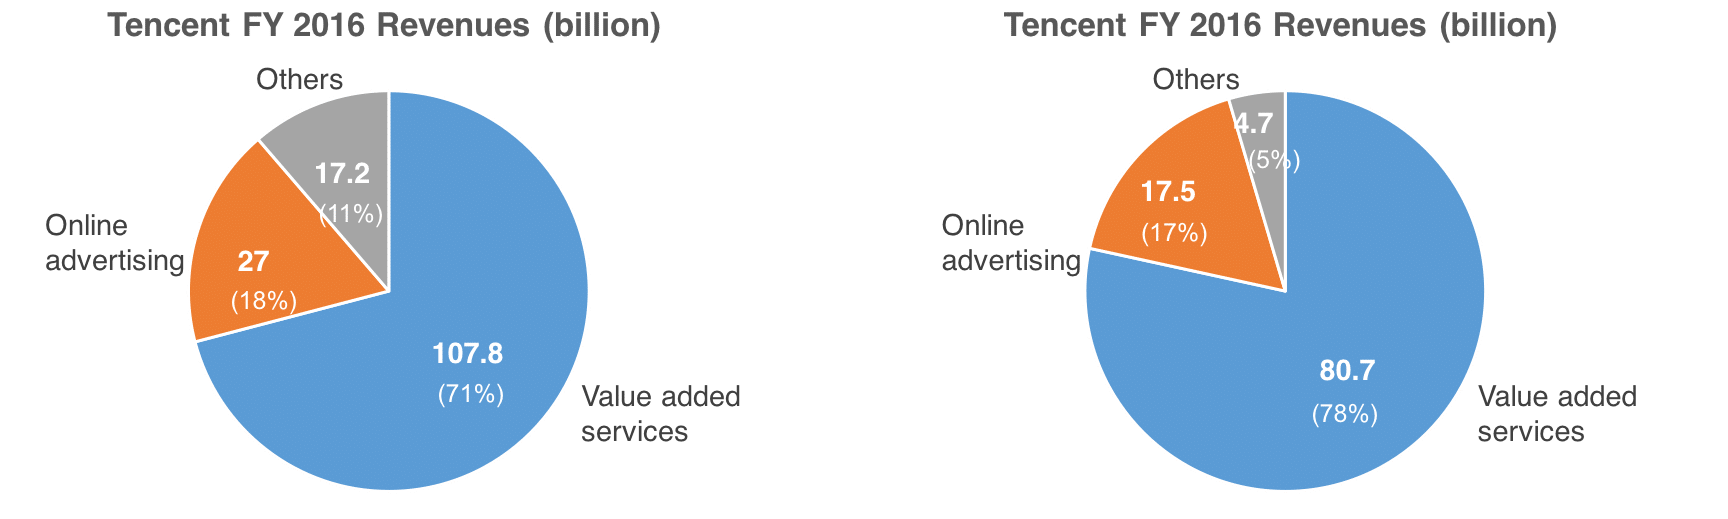 tencent-revenues-quarterly